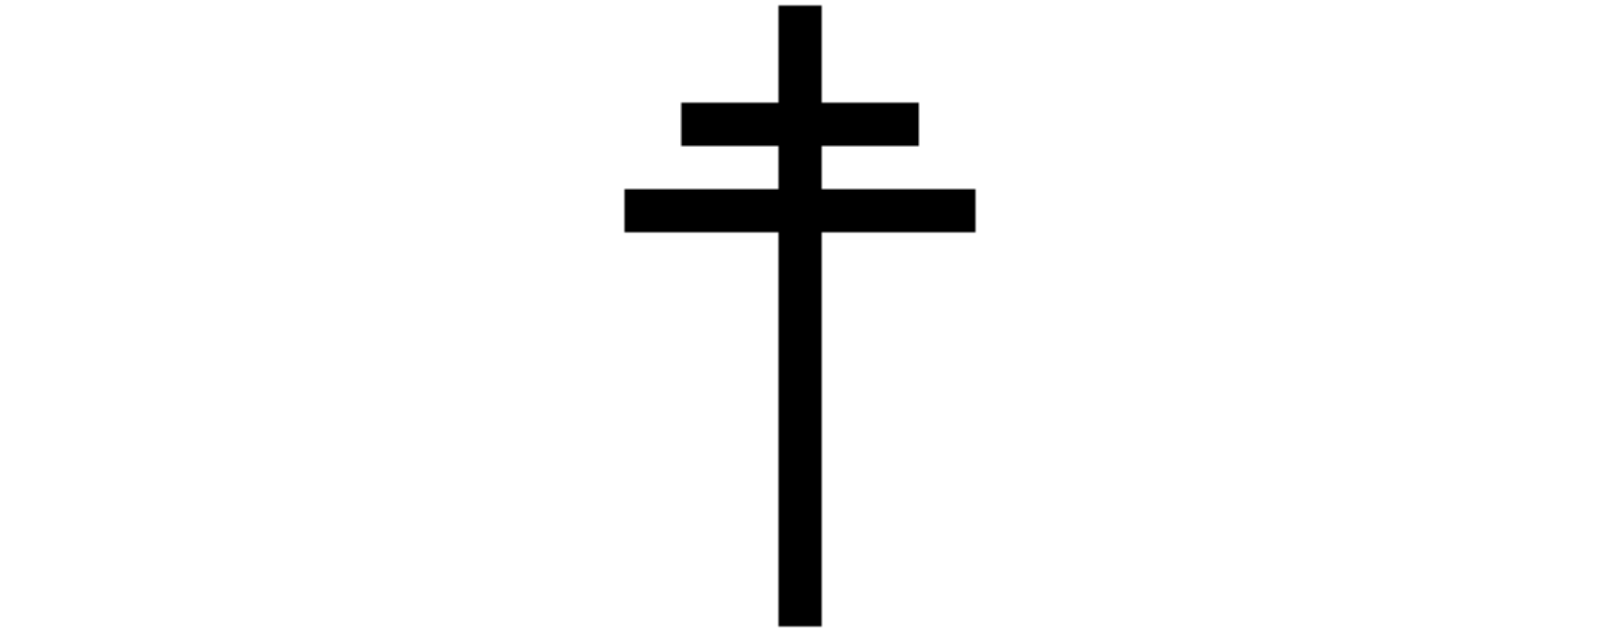 patriarchal cross